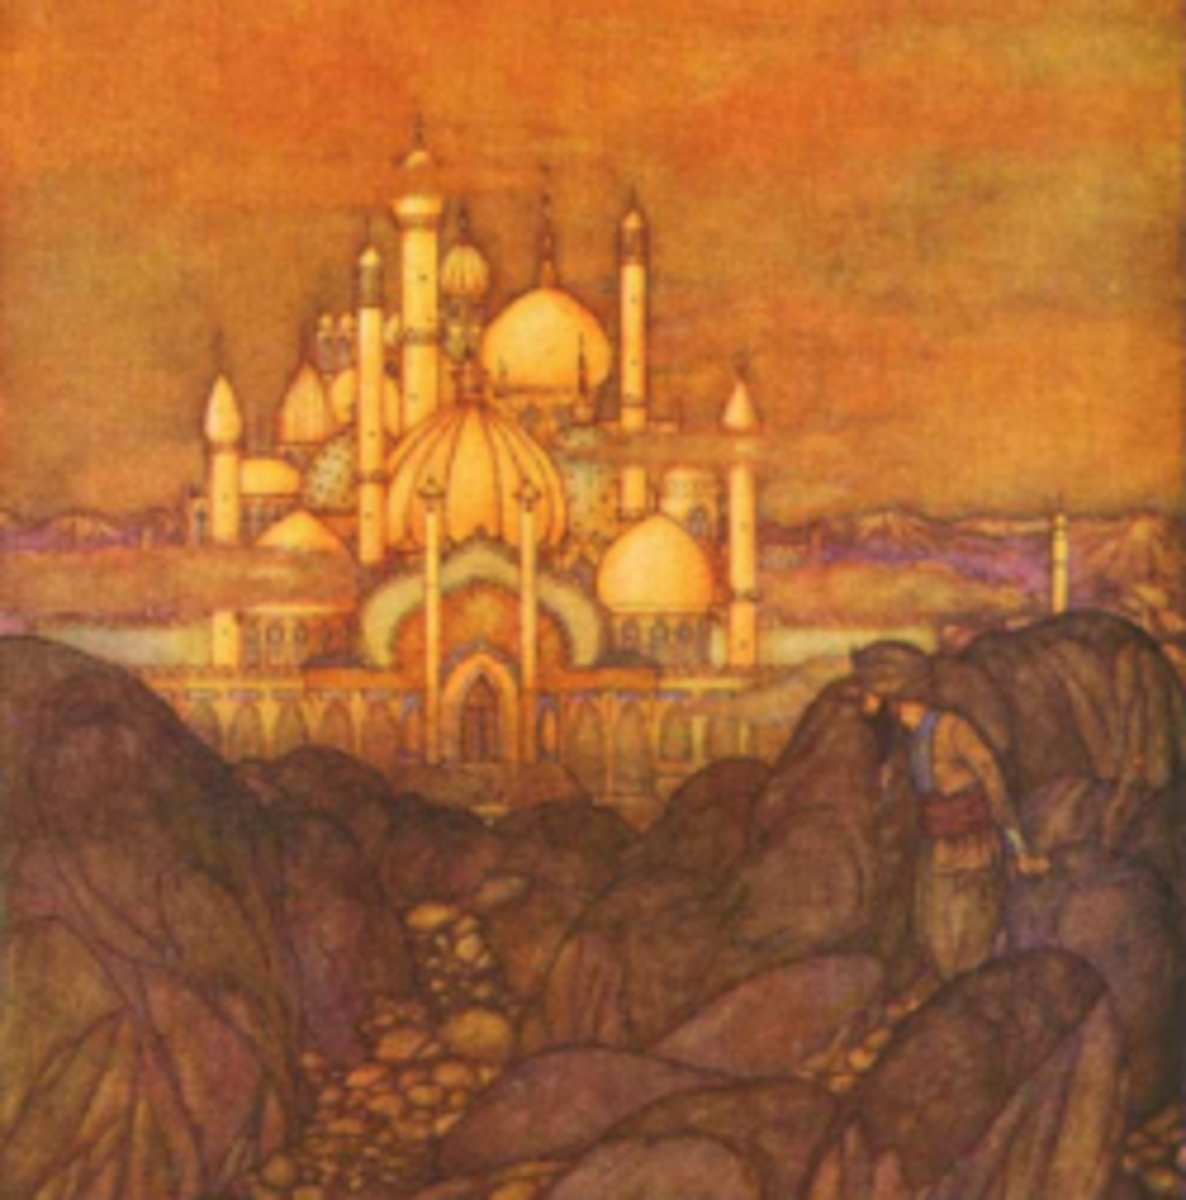 Tales of the Arabian Nights Inspires Art